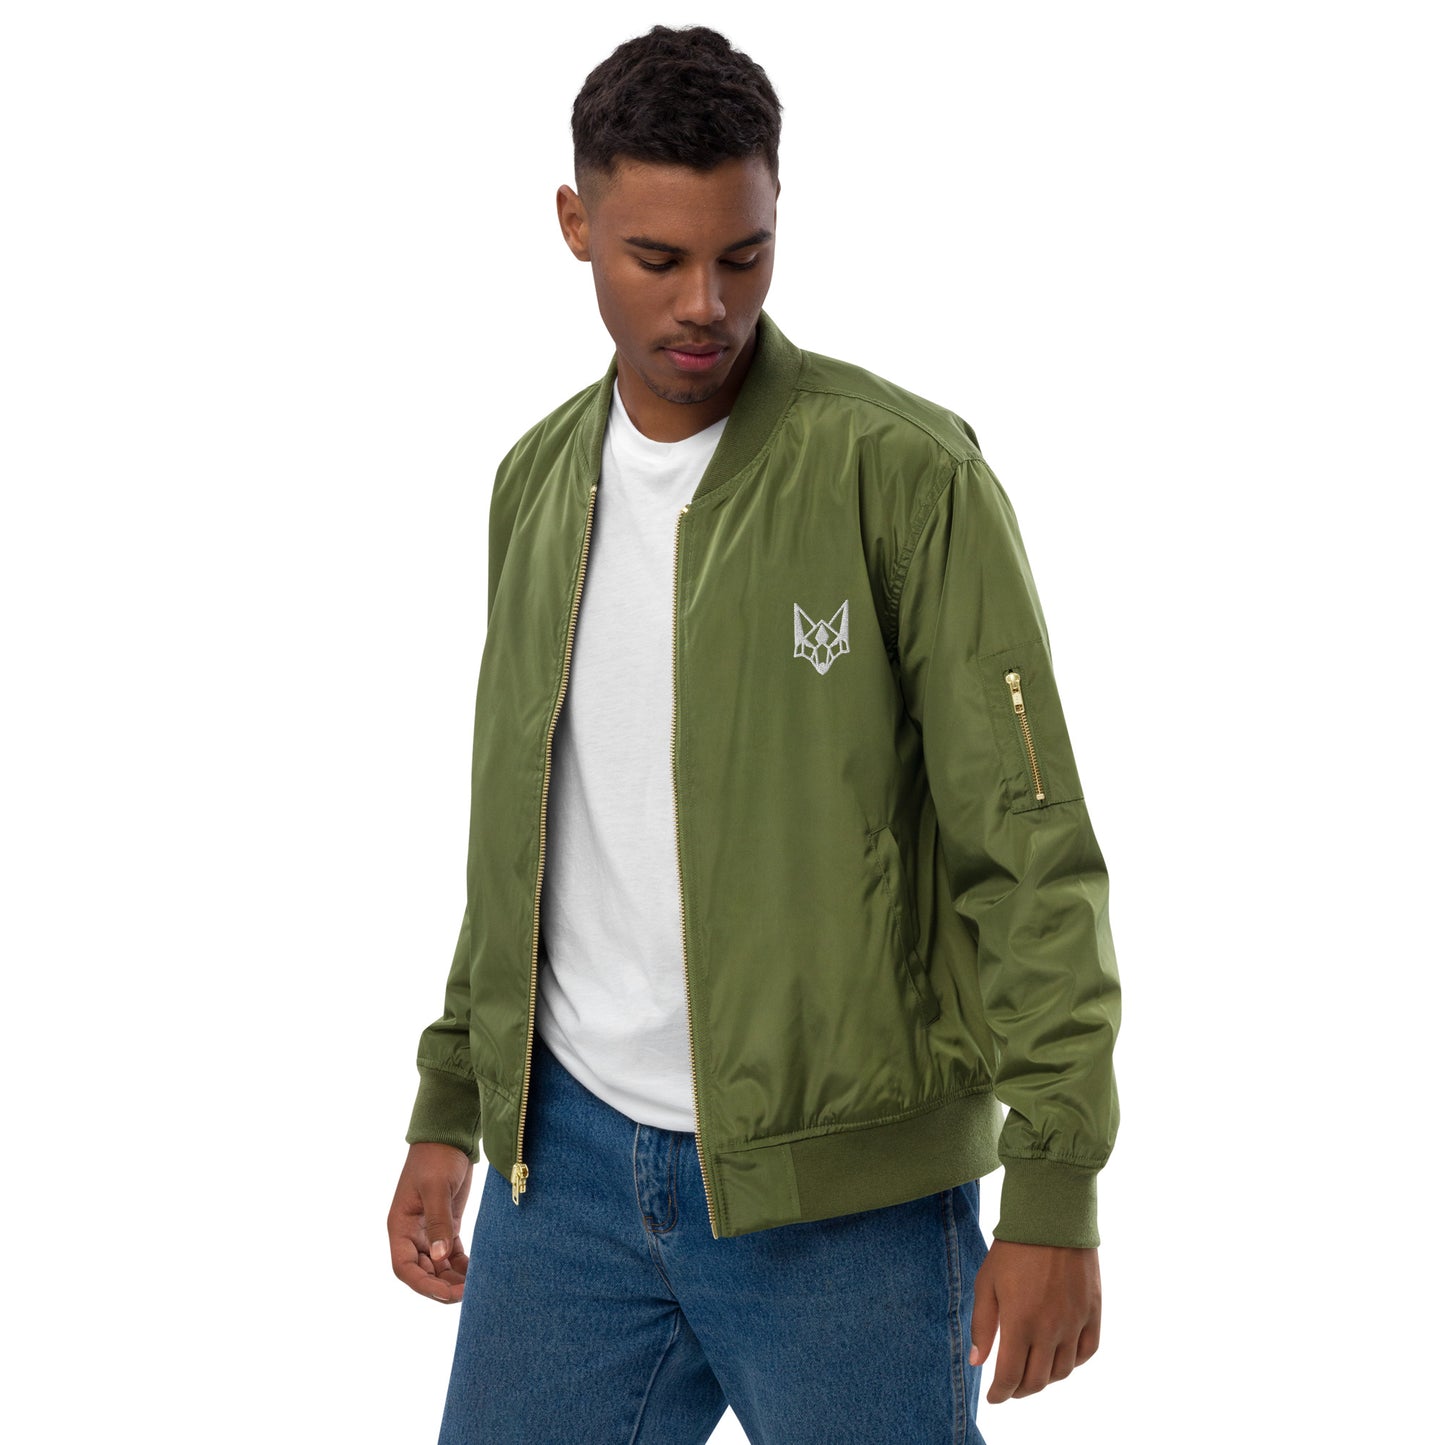 Hilltop Fox's Premium recycled bomber jacket